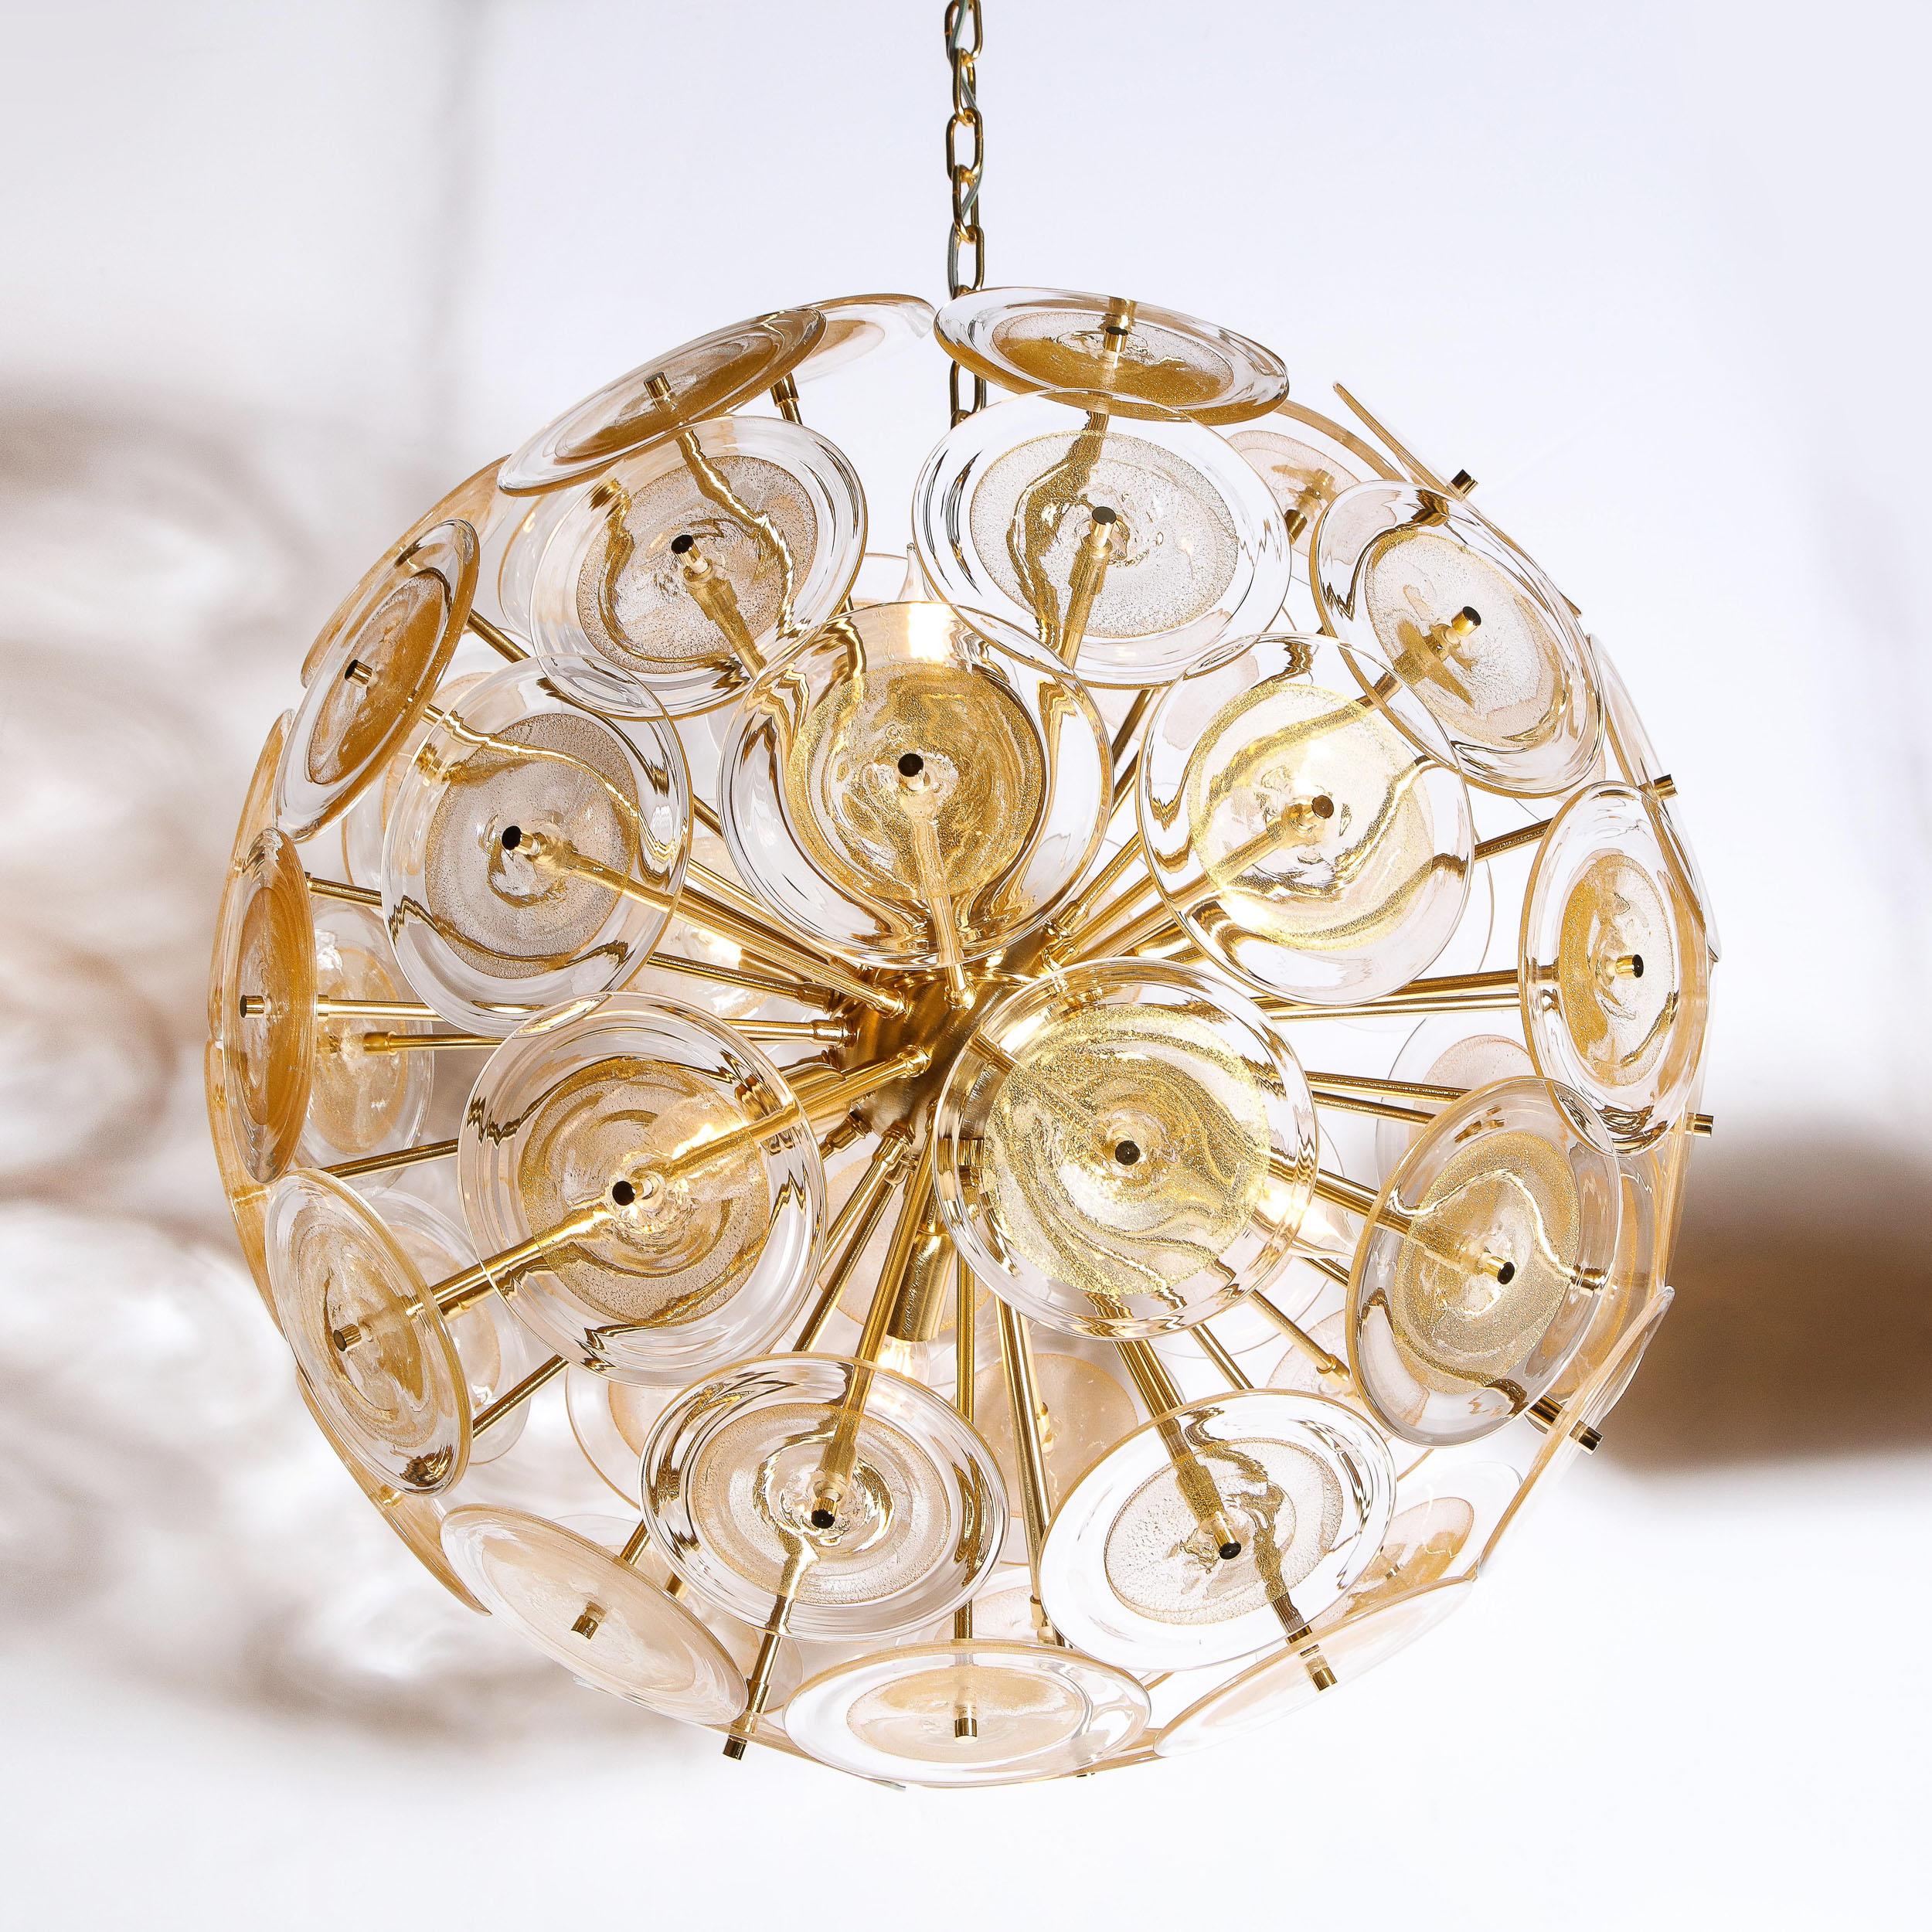 Modernist Brass Sputnik Chandelier W/ Handblown Translucent Murano Glass Discs For Sale 4